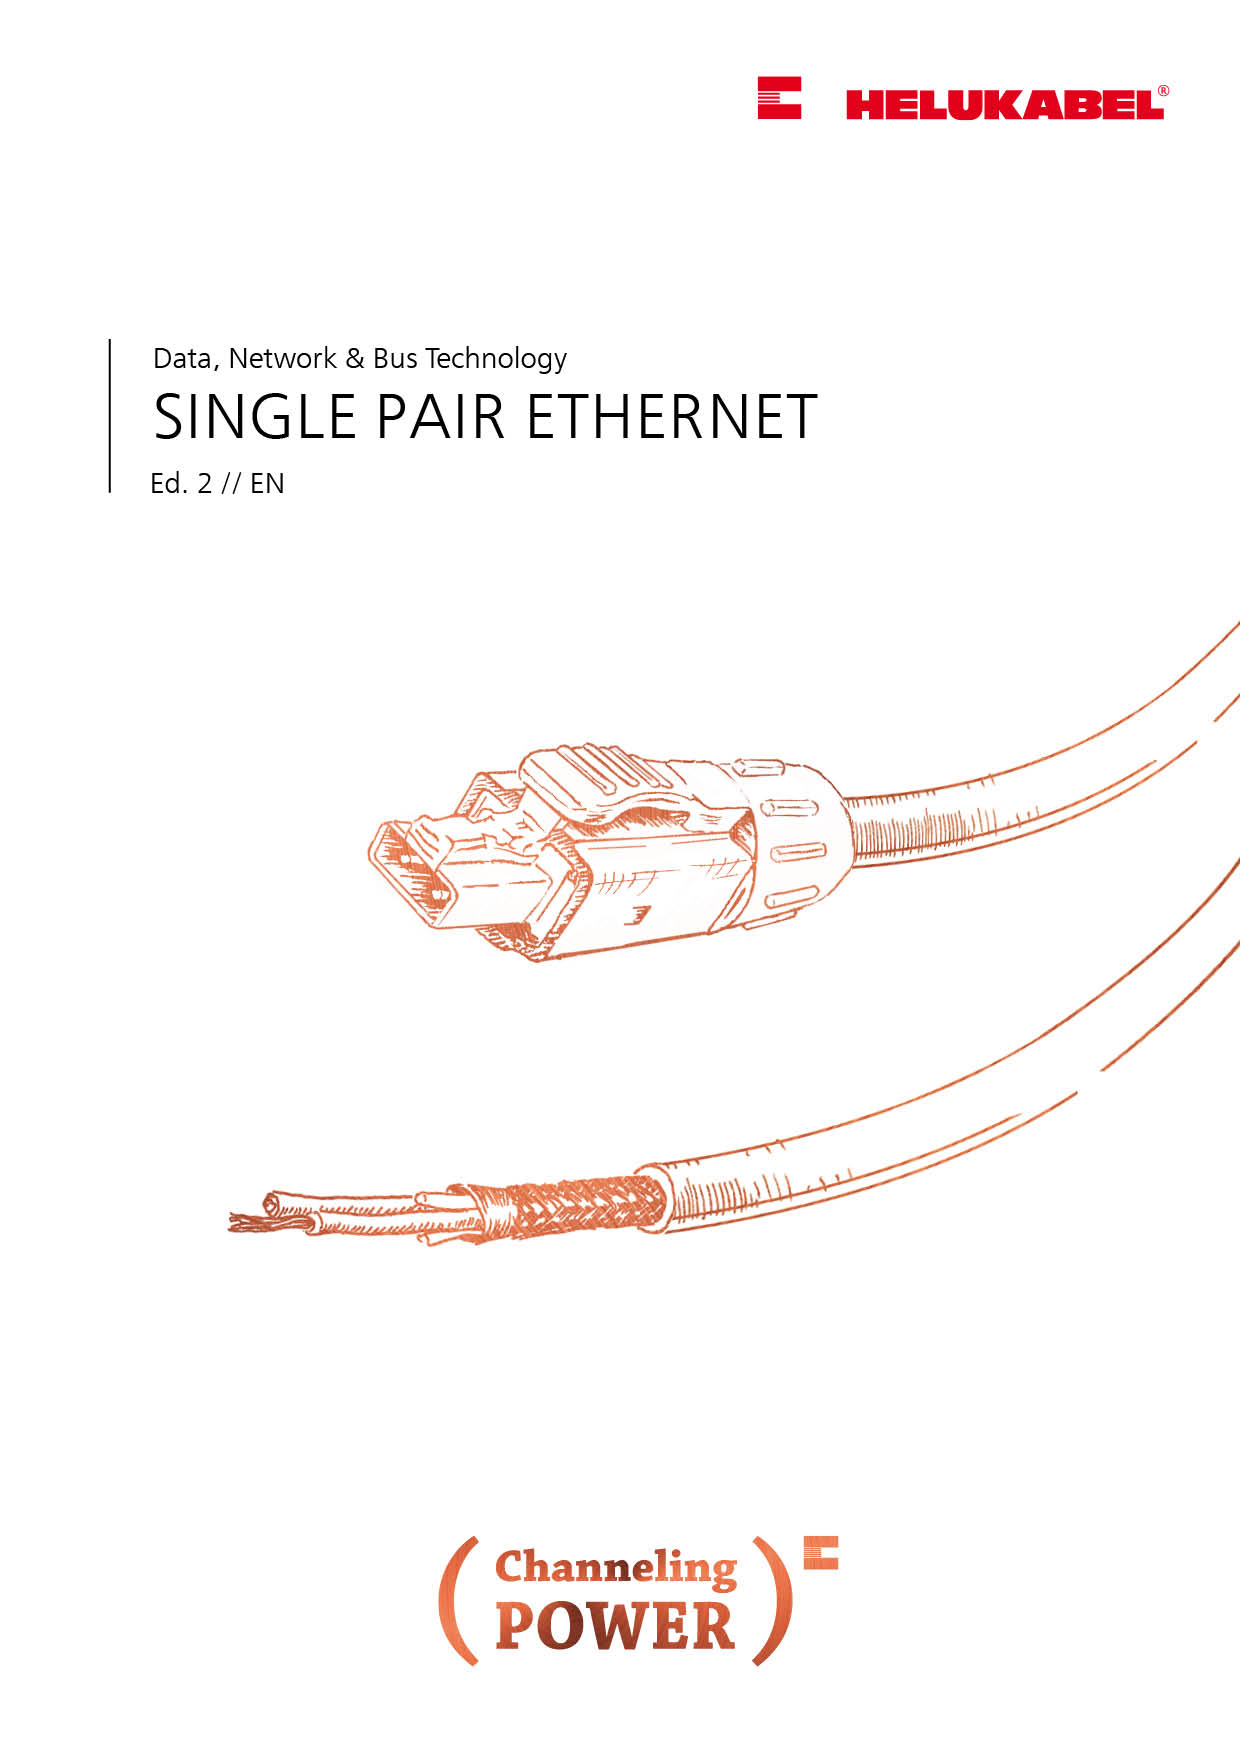 Single Pair Ethernet (SPE)